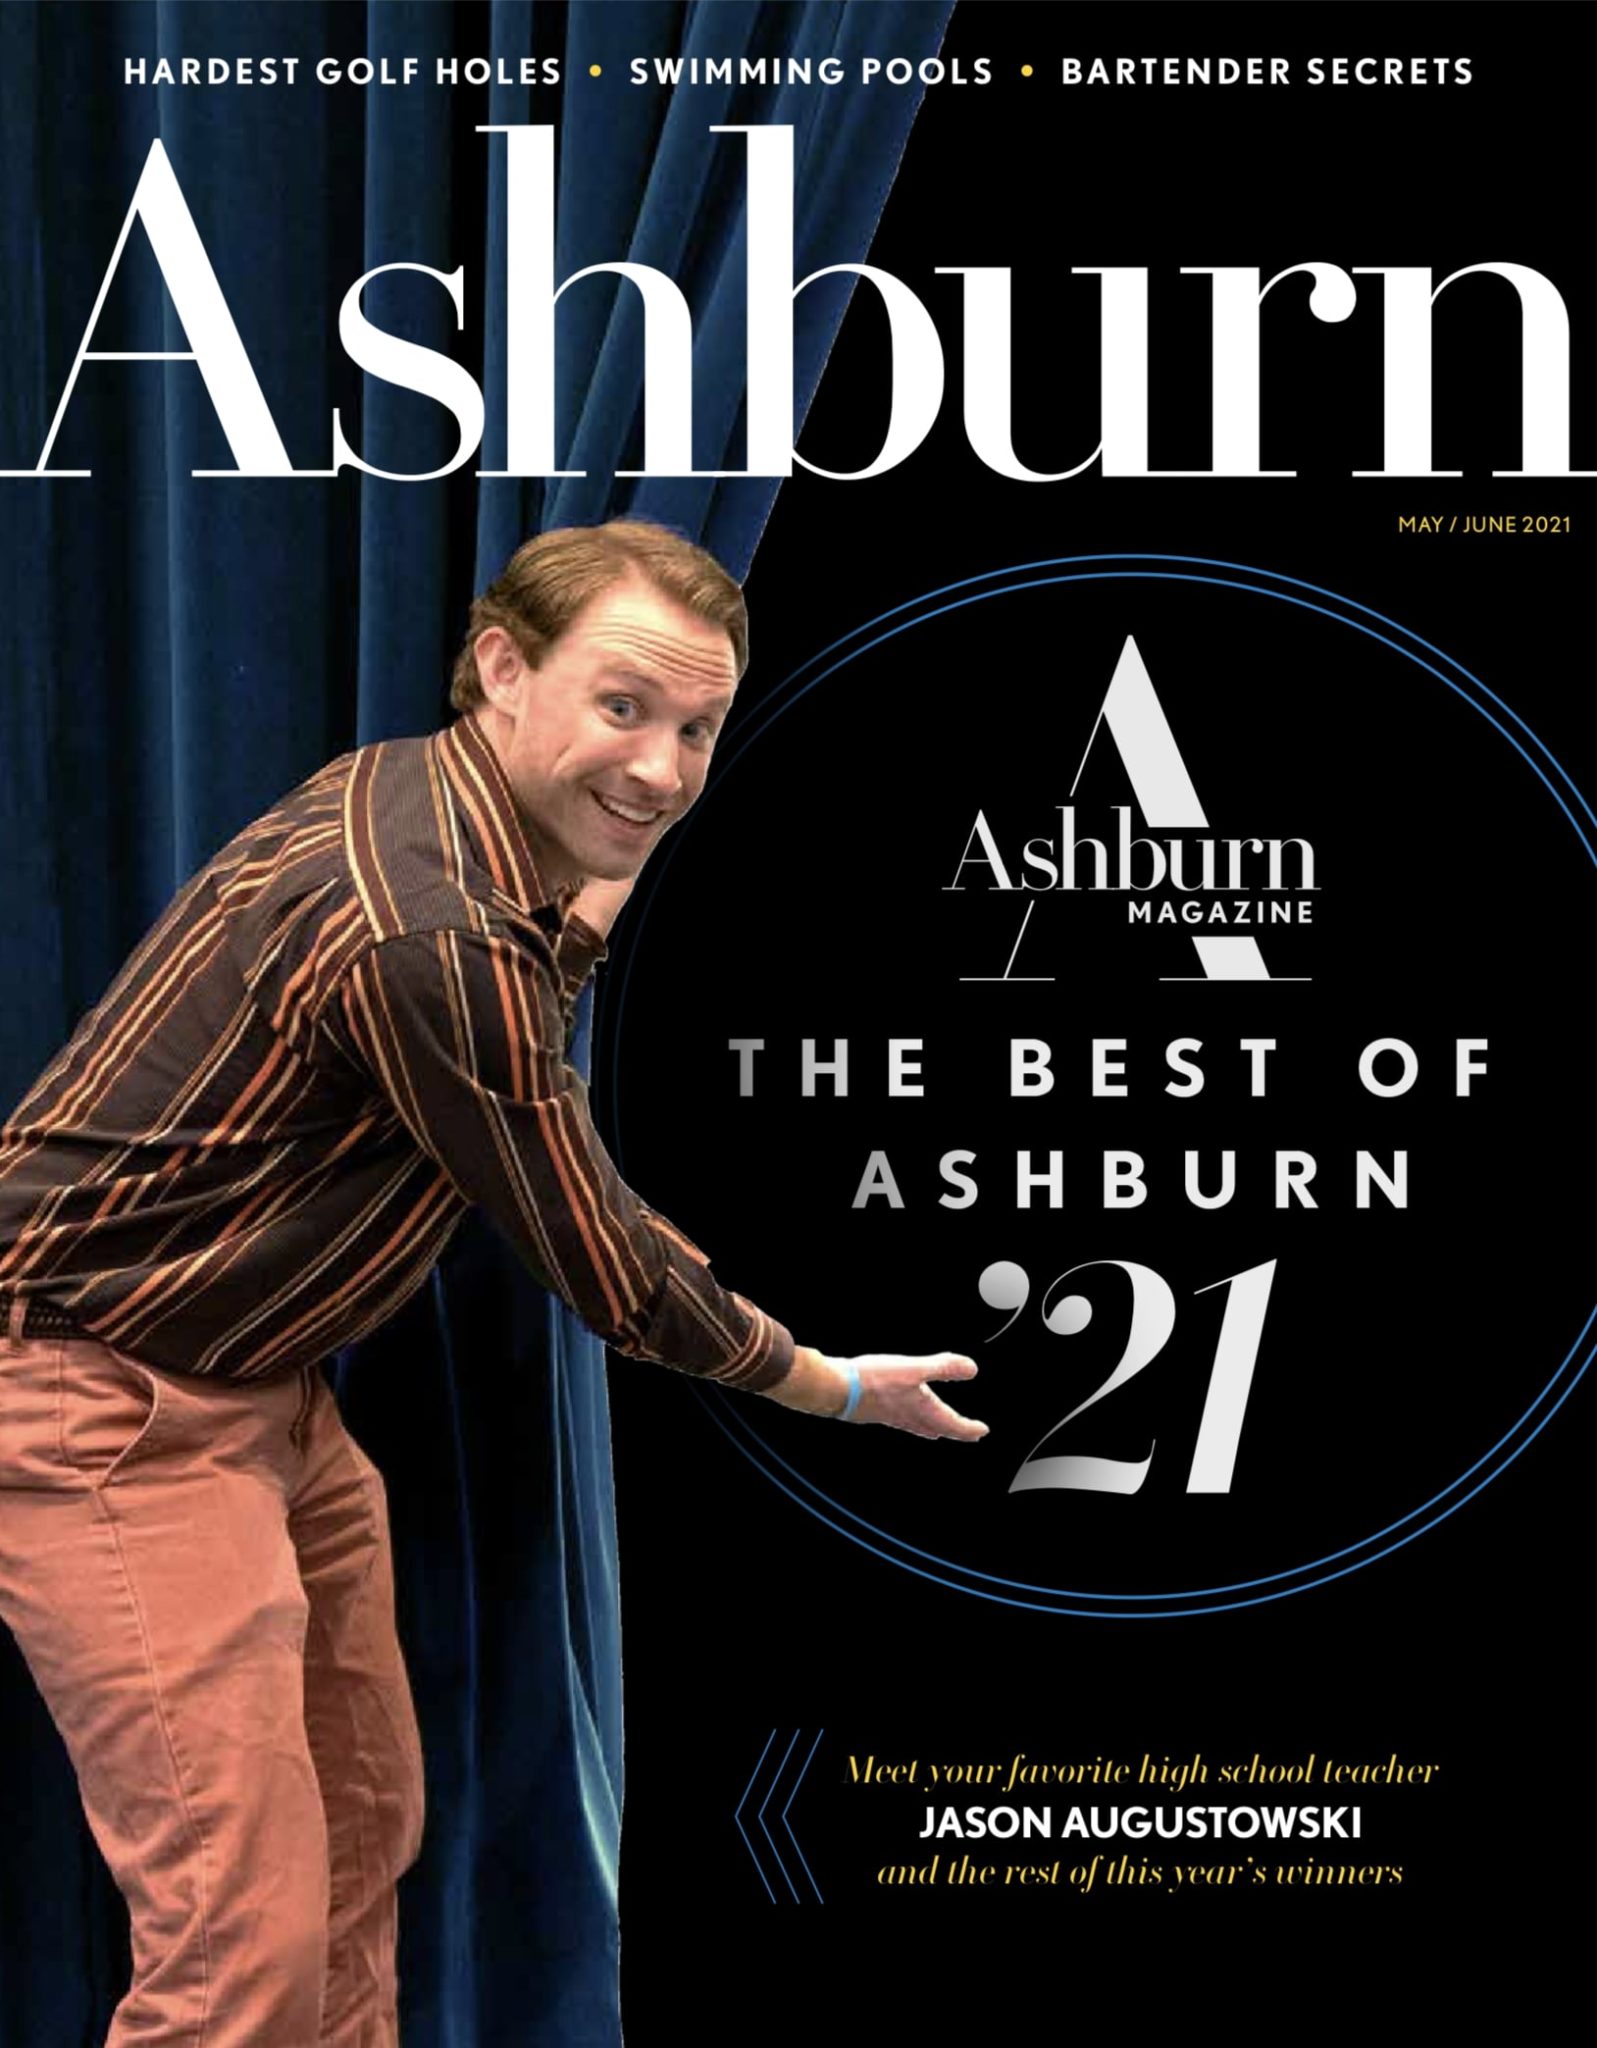 "Best of Ashburn" winners announced in latest Ashburn Magazine The Burn